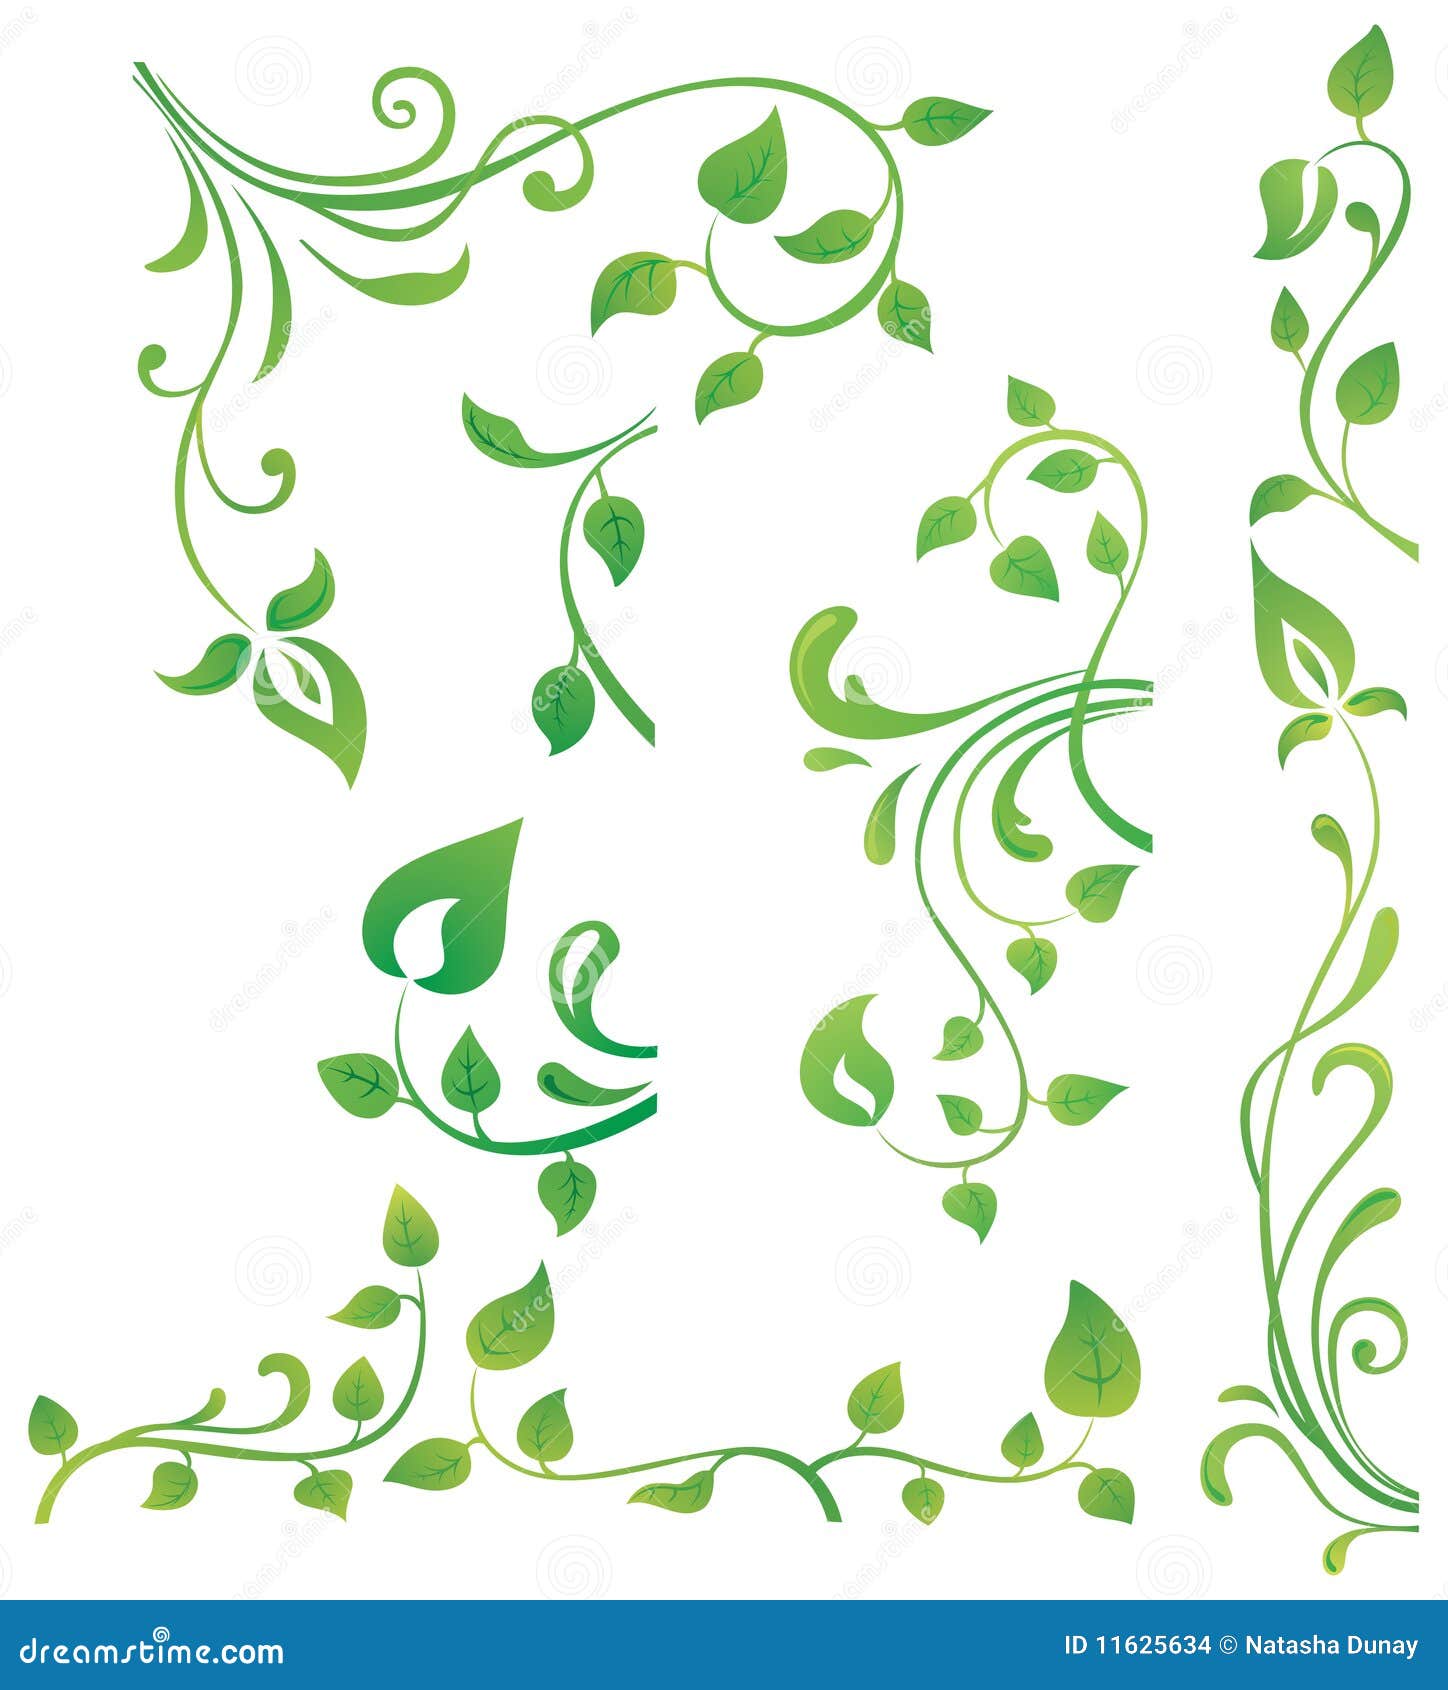 Premium Vector  Ivy corners green vines decorative frame or design elements